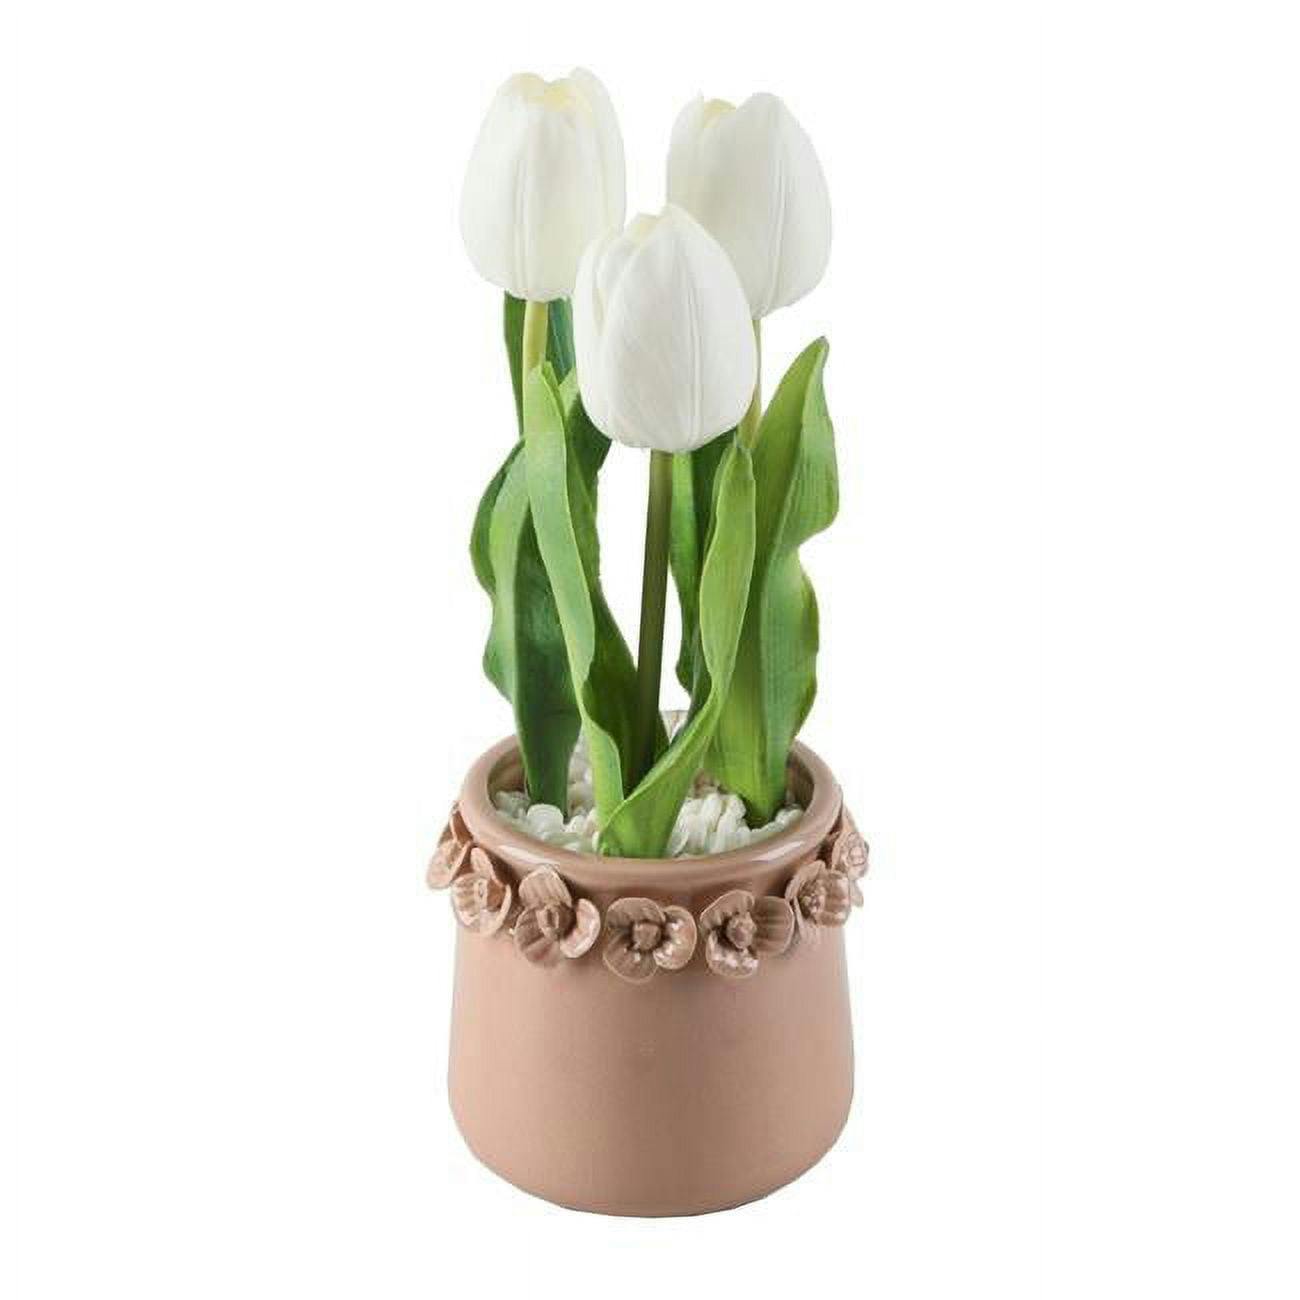 Chic Spring White Tulips in Pink Ceramic Planter - 12.75"